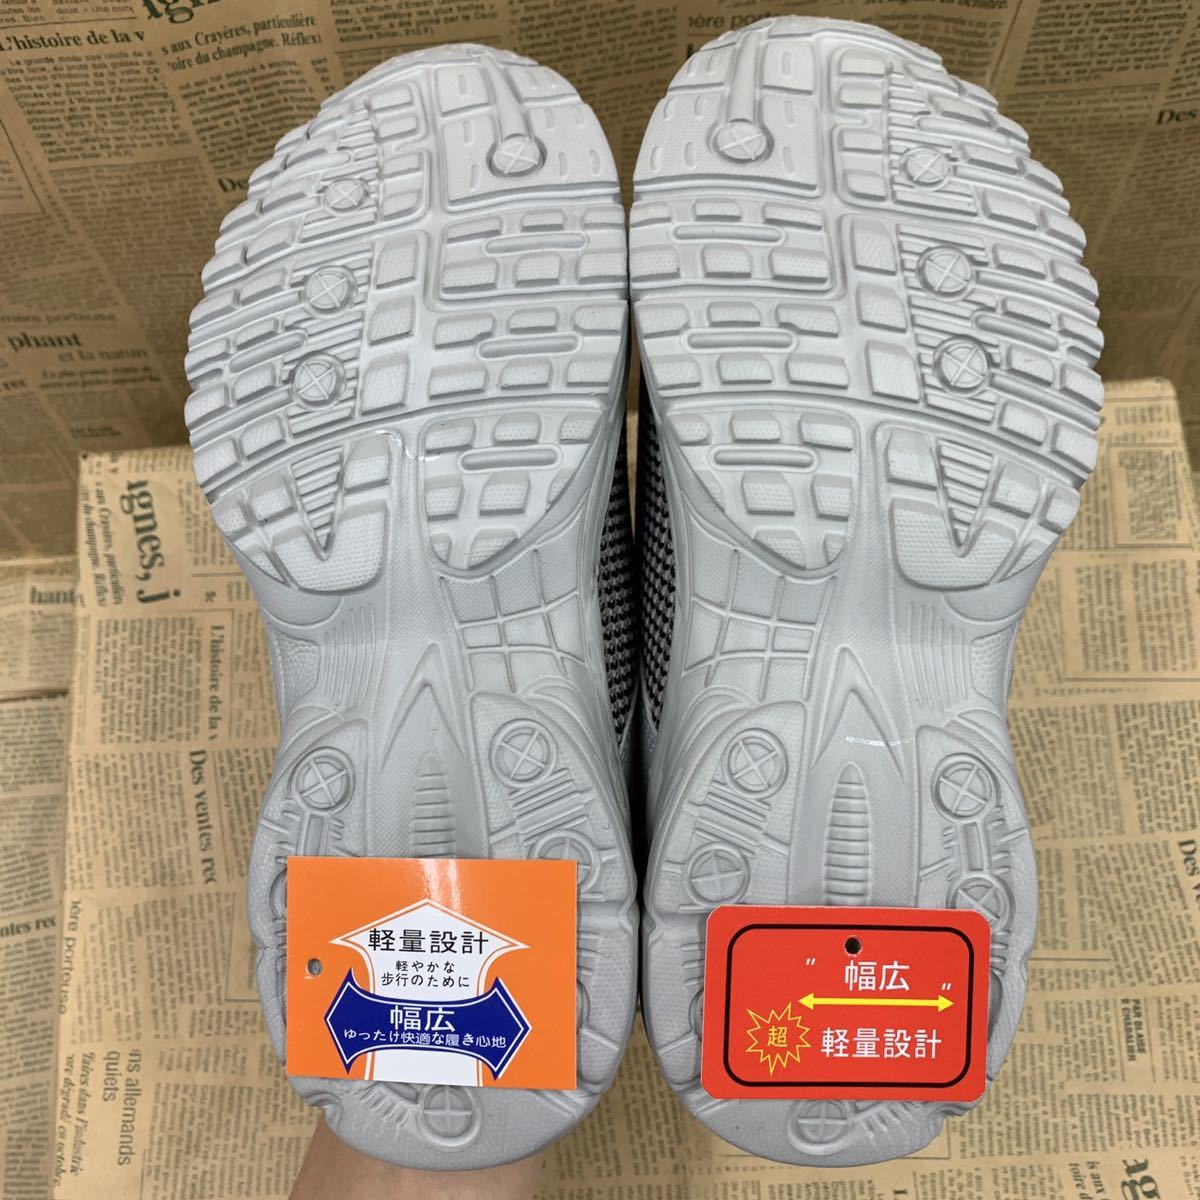  new goods men's S size 24.0-24.5cm light weight sabot sandals sport sandals sabot sneakers clog sandals clog shoes gray osw1269